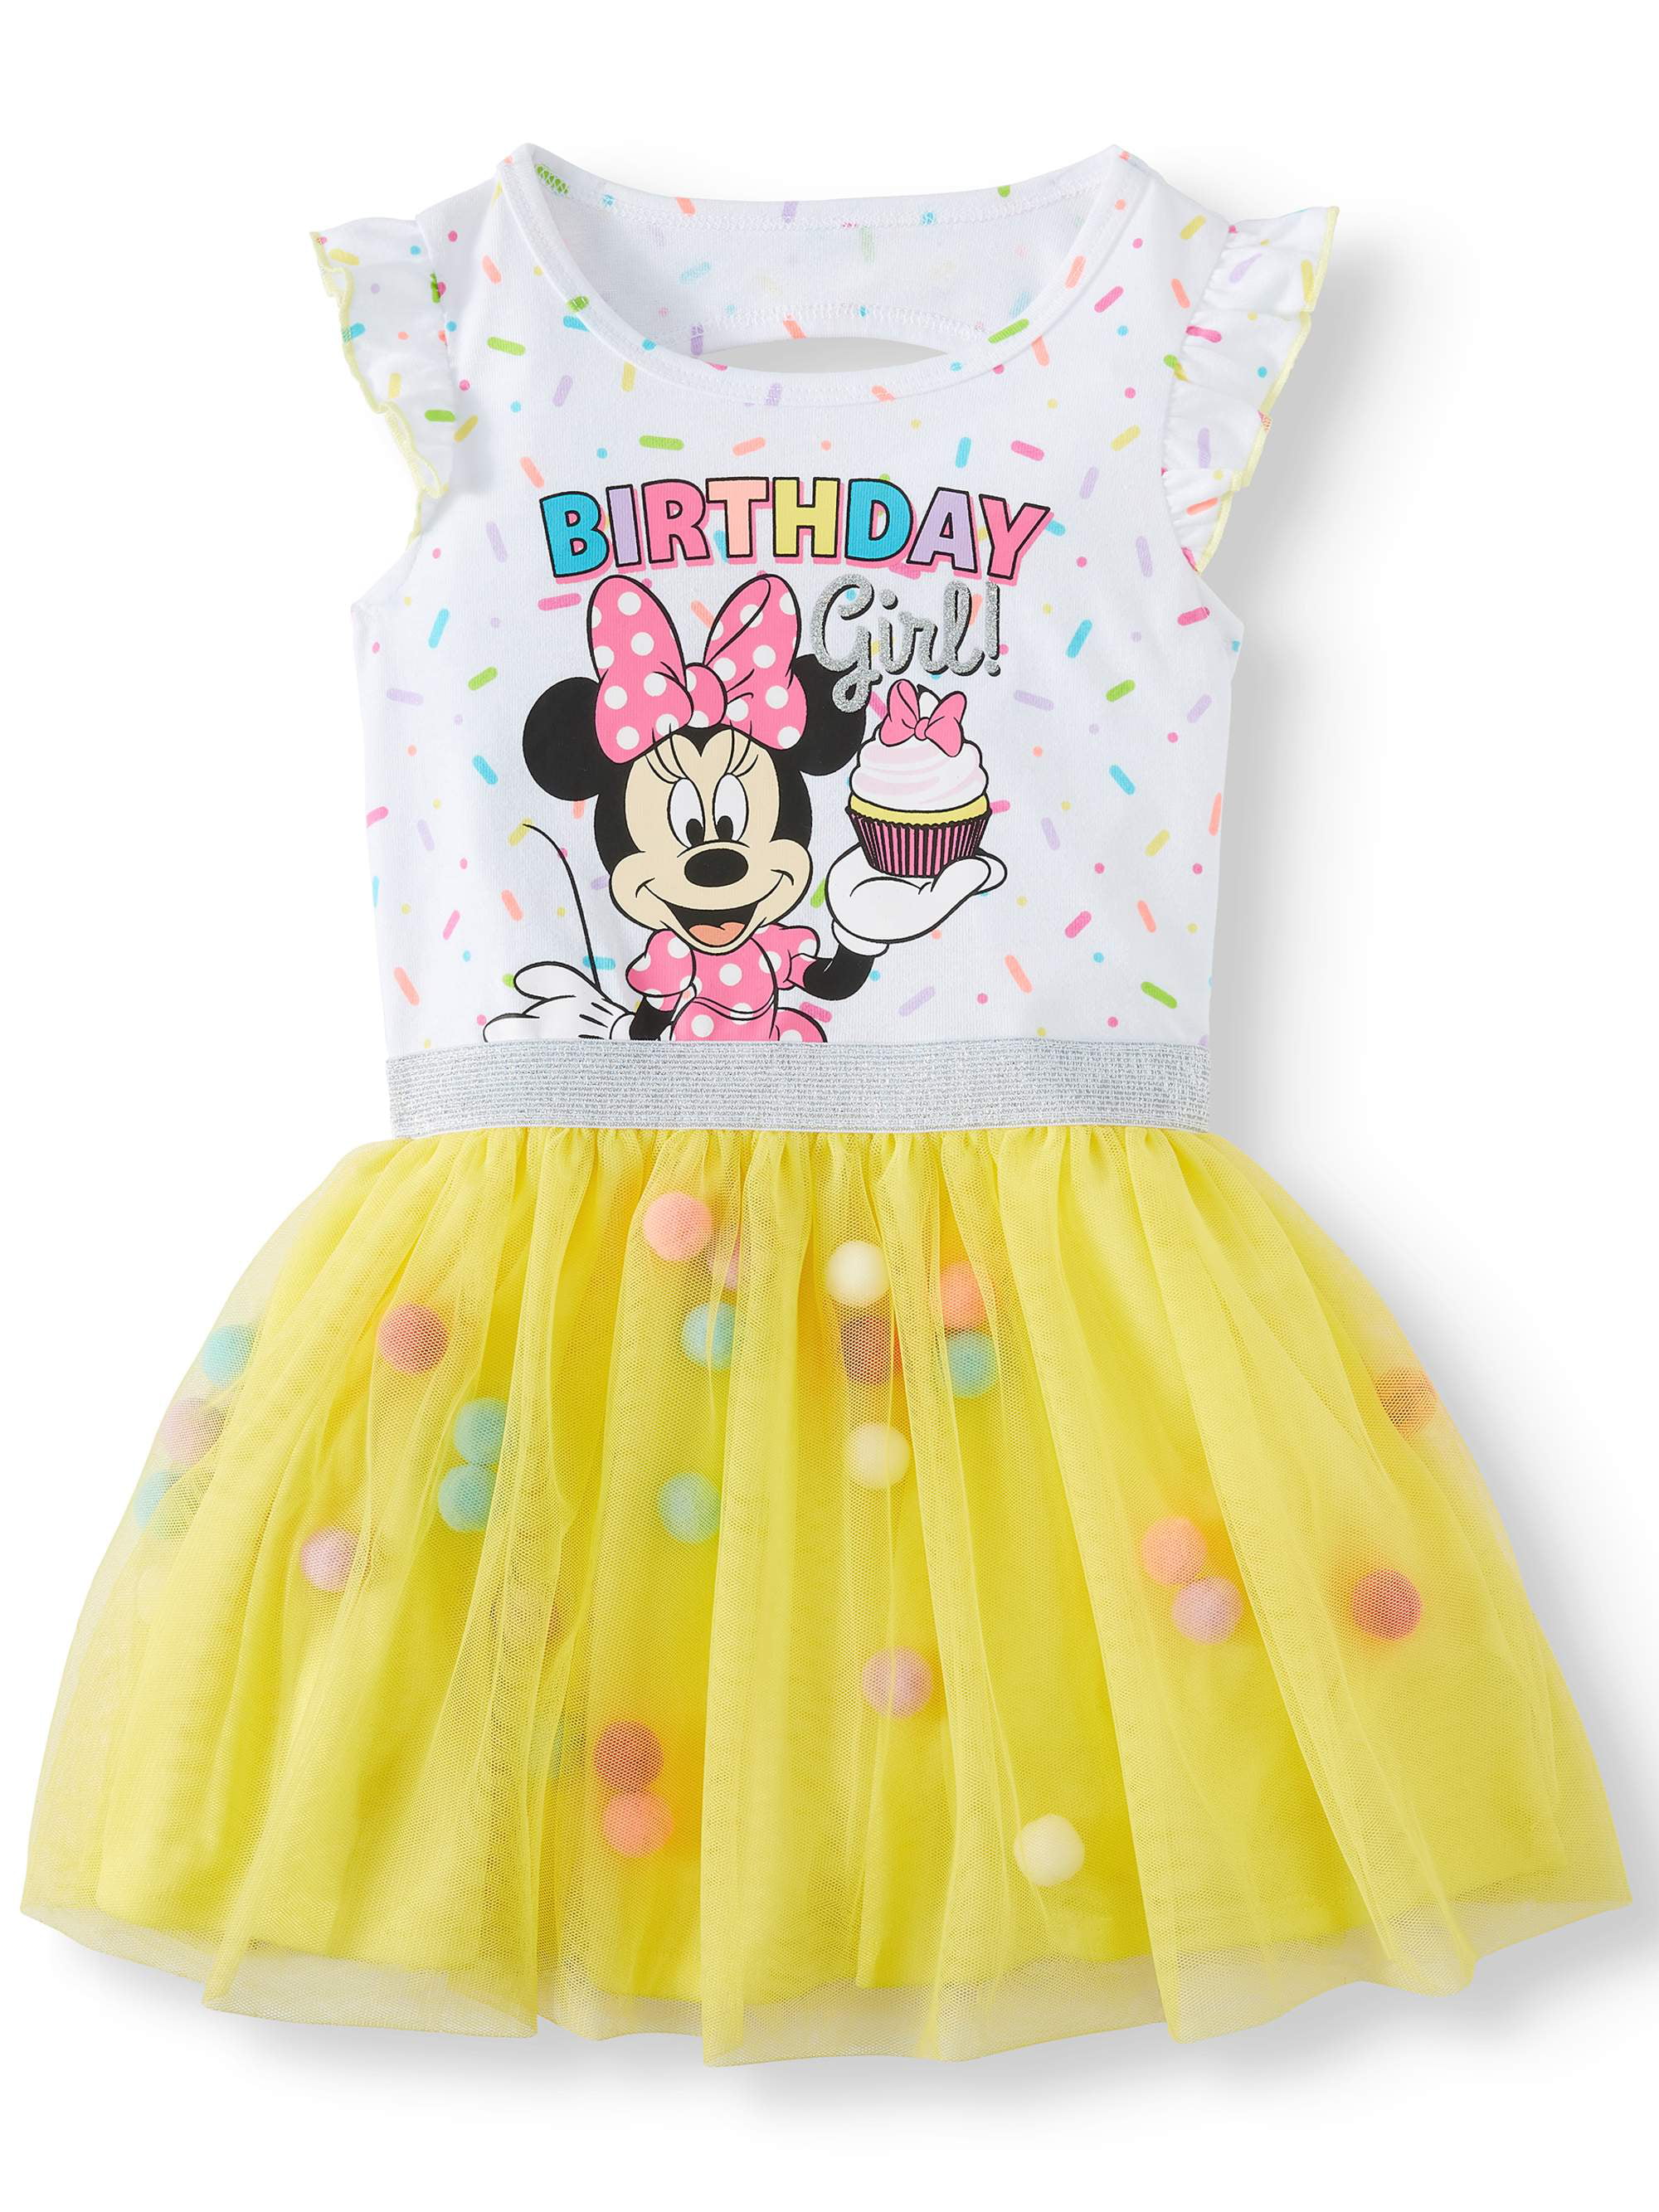 Minnie Mouse Birthday Girl Tutu Dress 